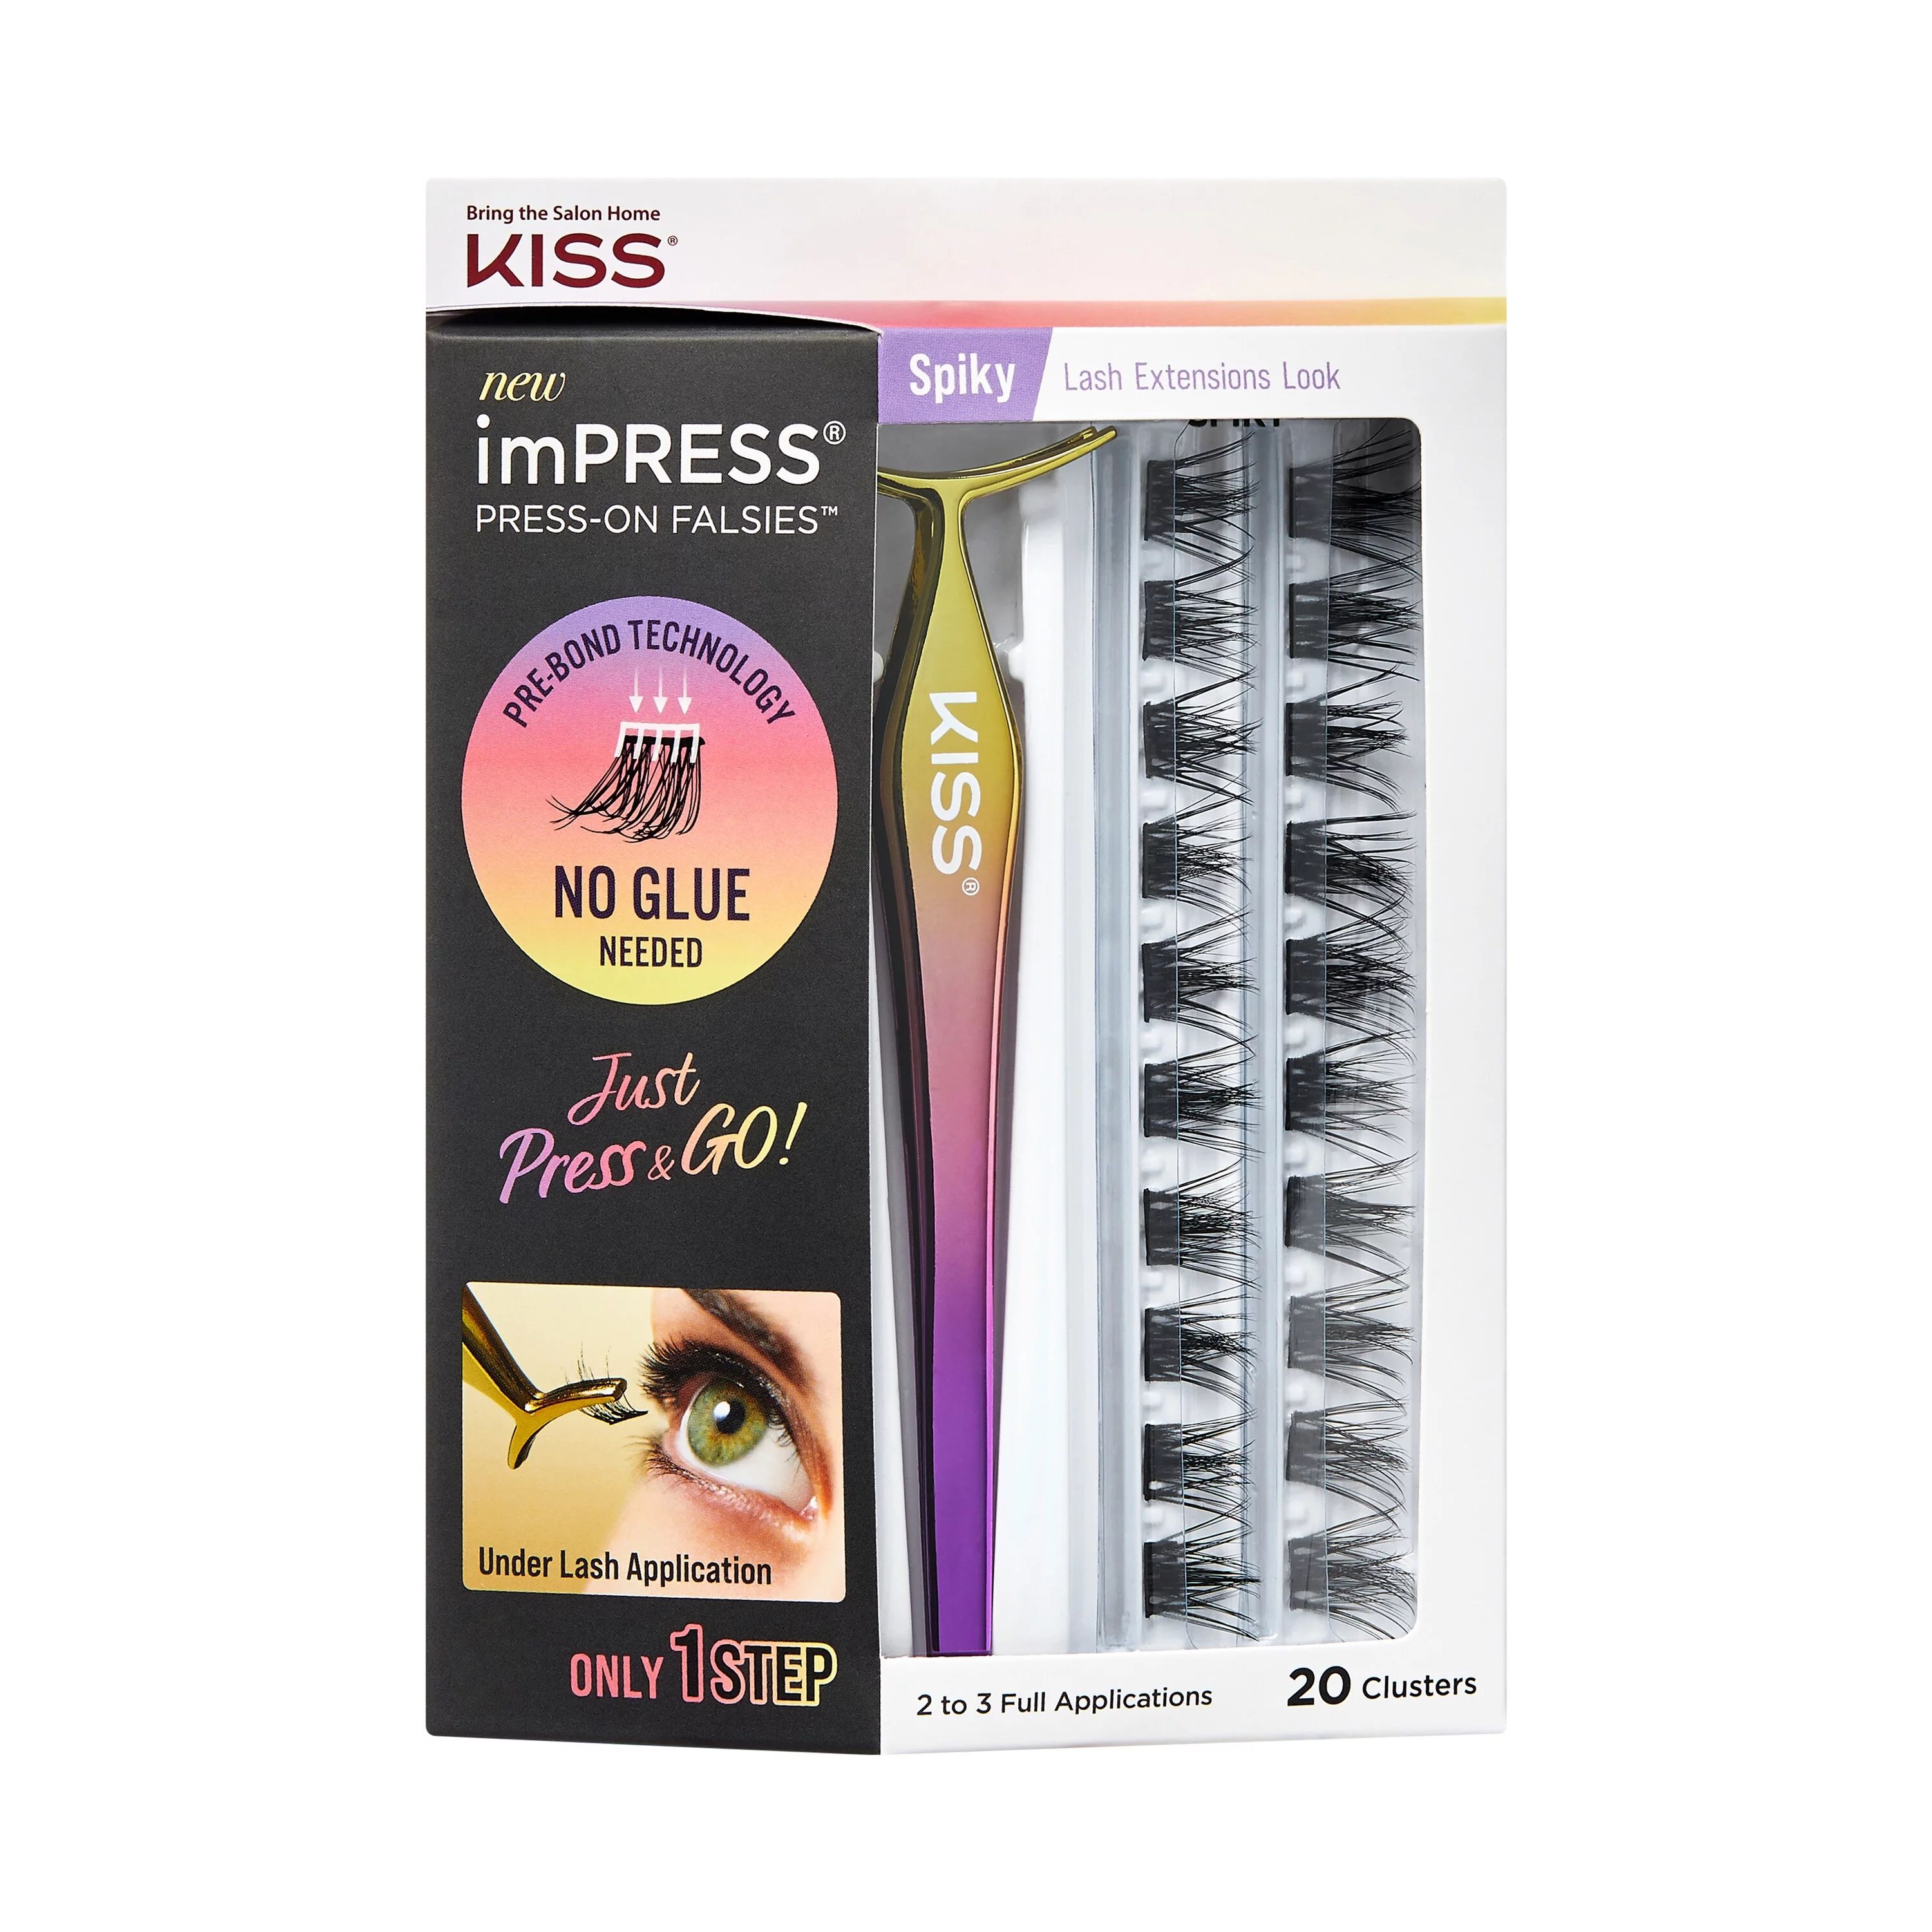 KISS imPRESS Press-On Falsies Eyelash Clusters Kit, Spiky, Black, 20 Clusters | Walmart (US)